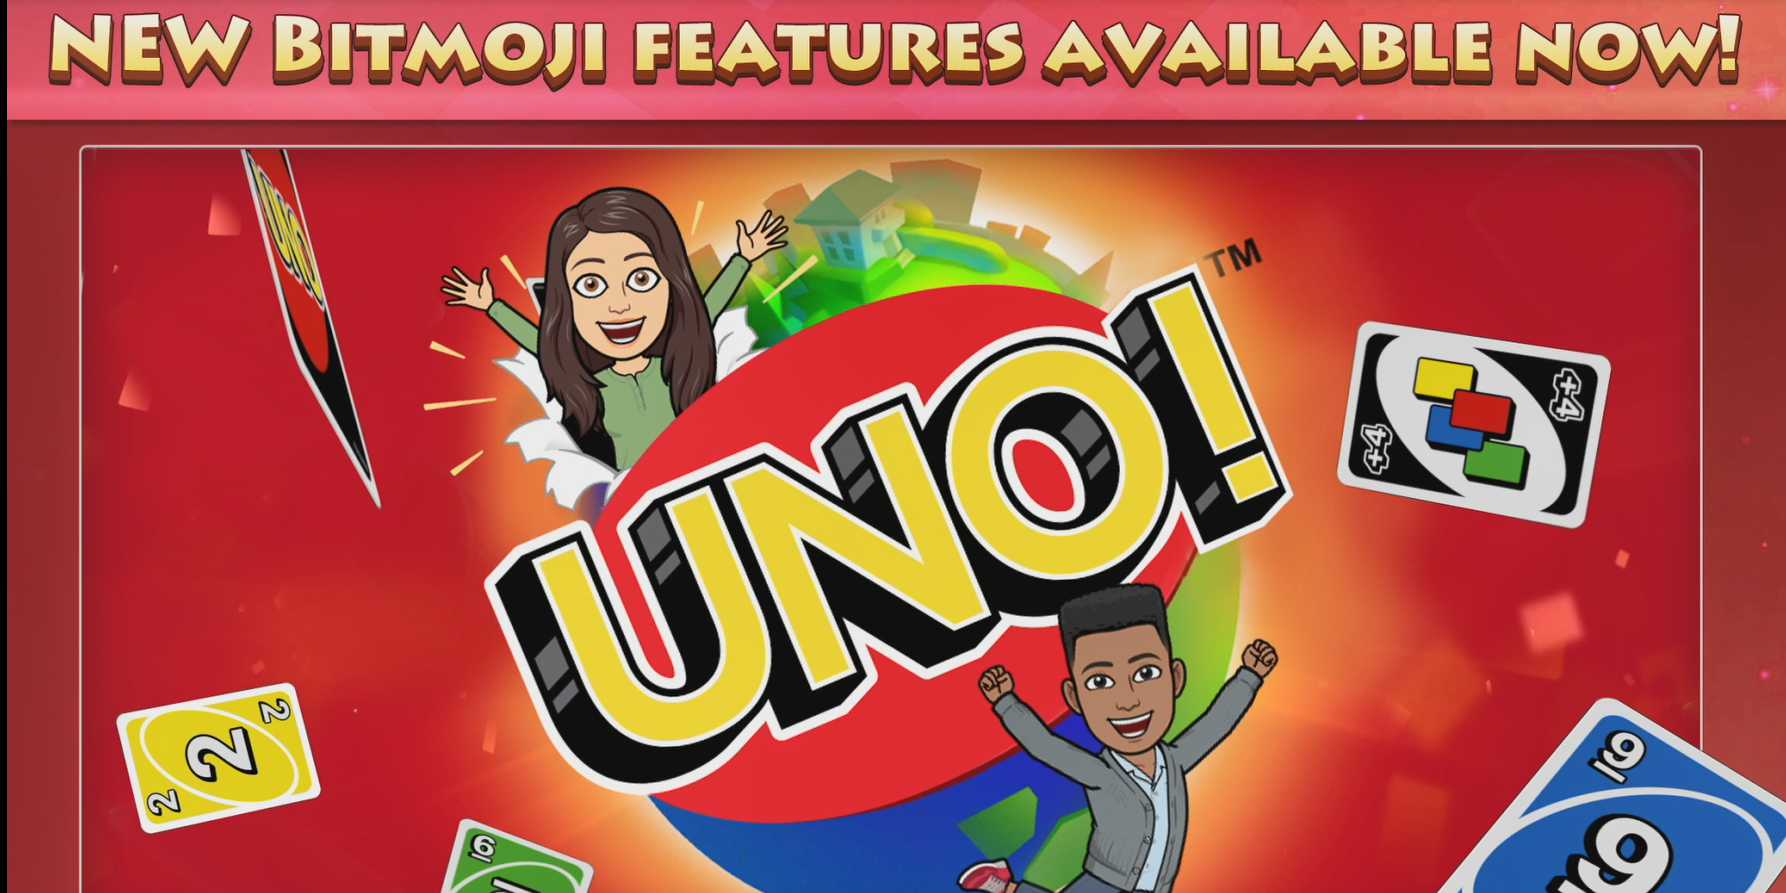 UNO!™ by Mattel163 Limited